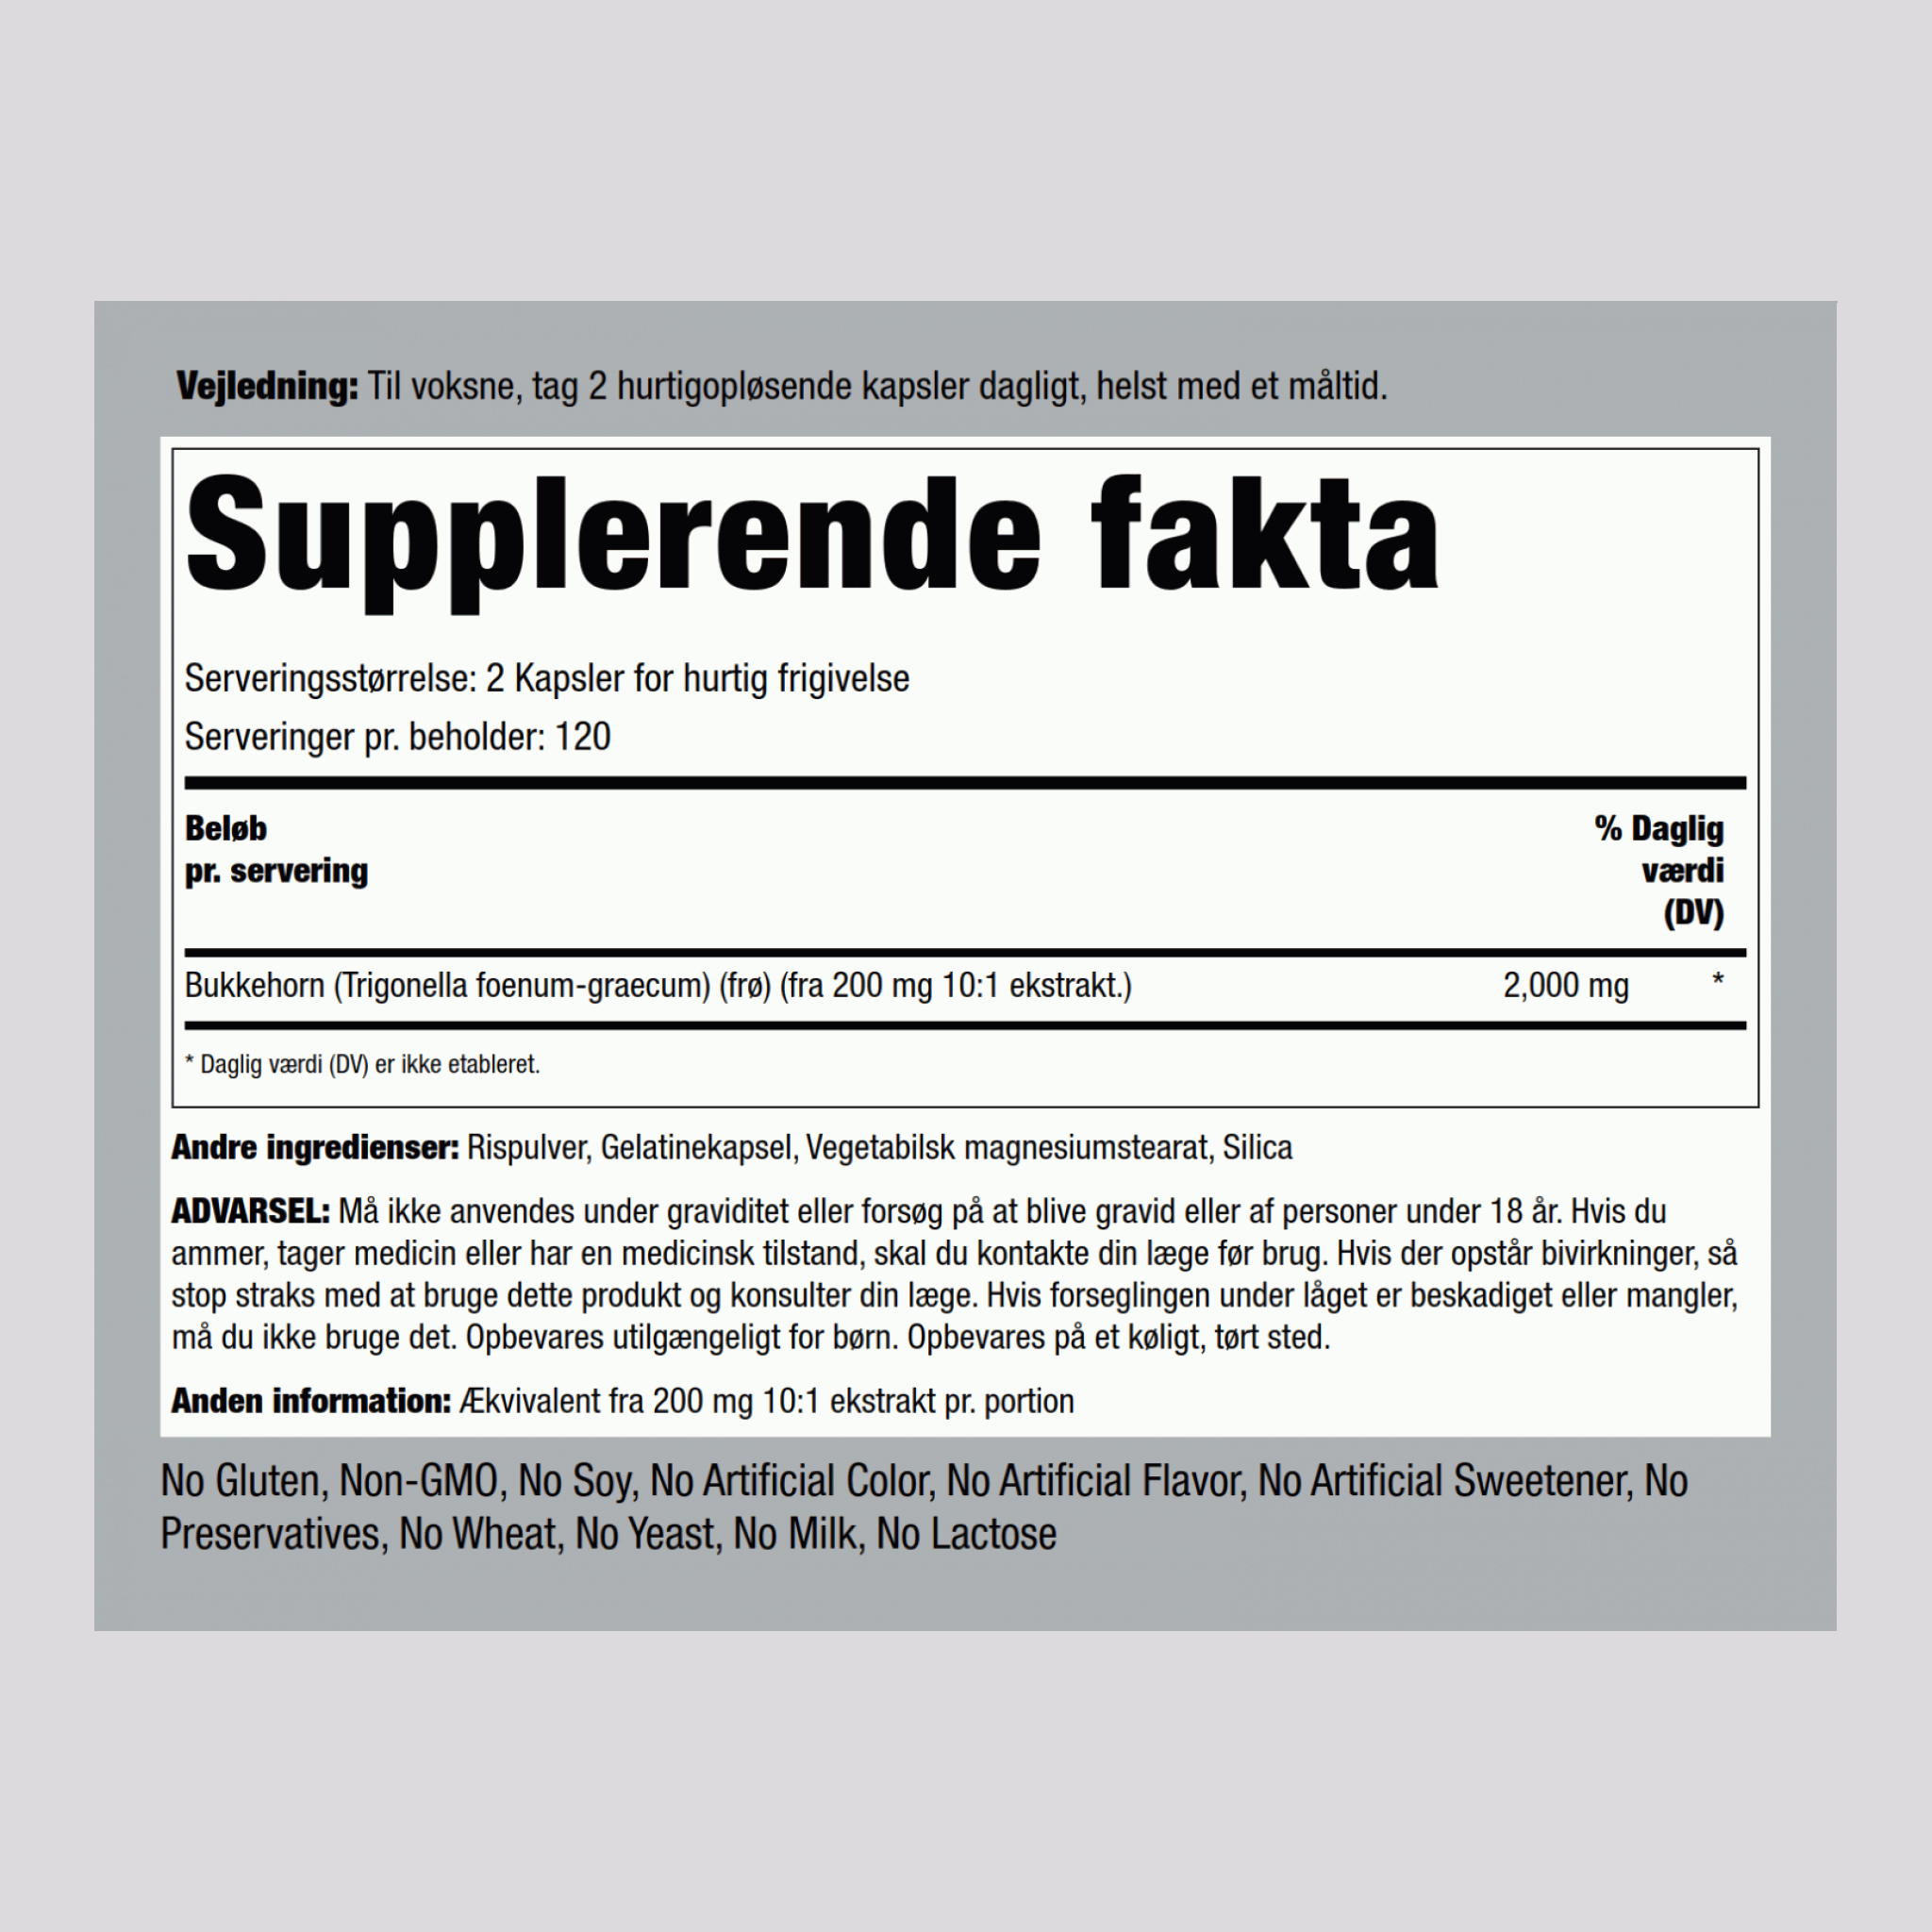 Fenugreek, 2000 mg (per serving), 240 Quick Release Capsules, 2  Bottles